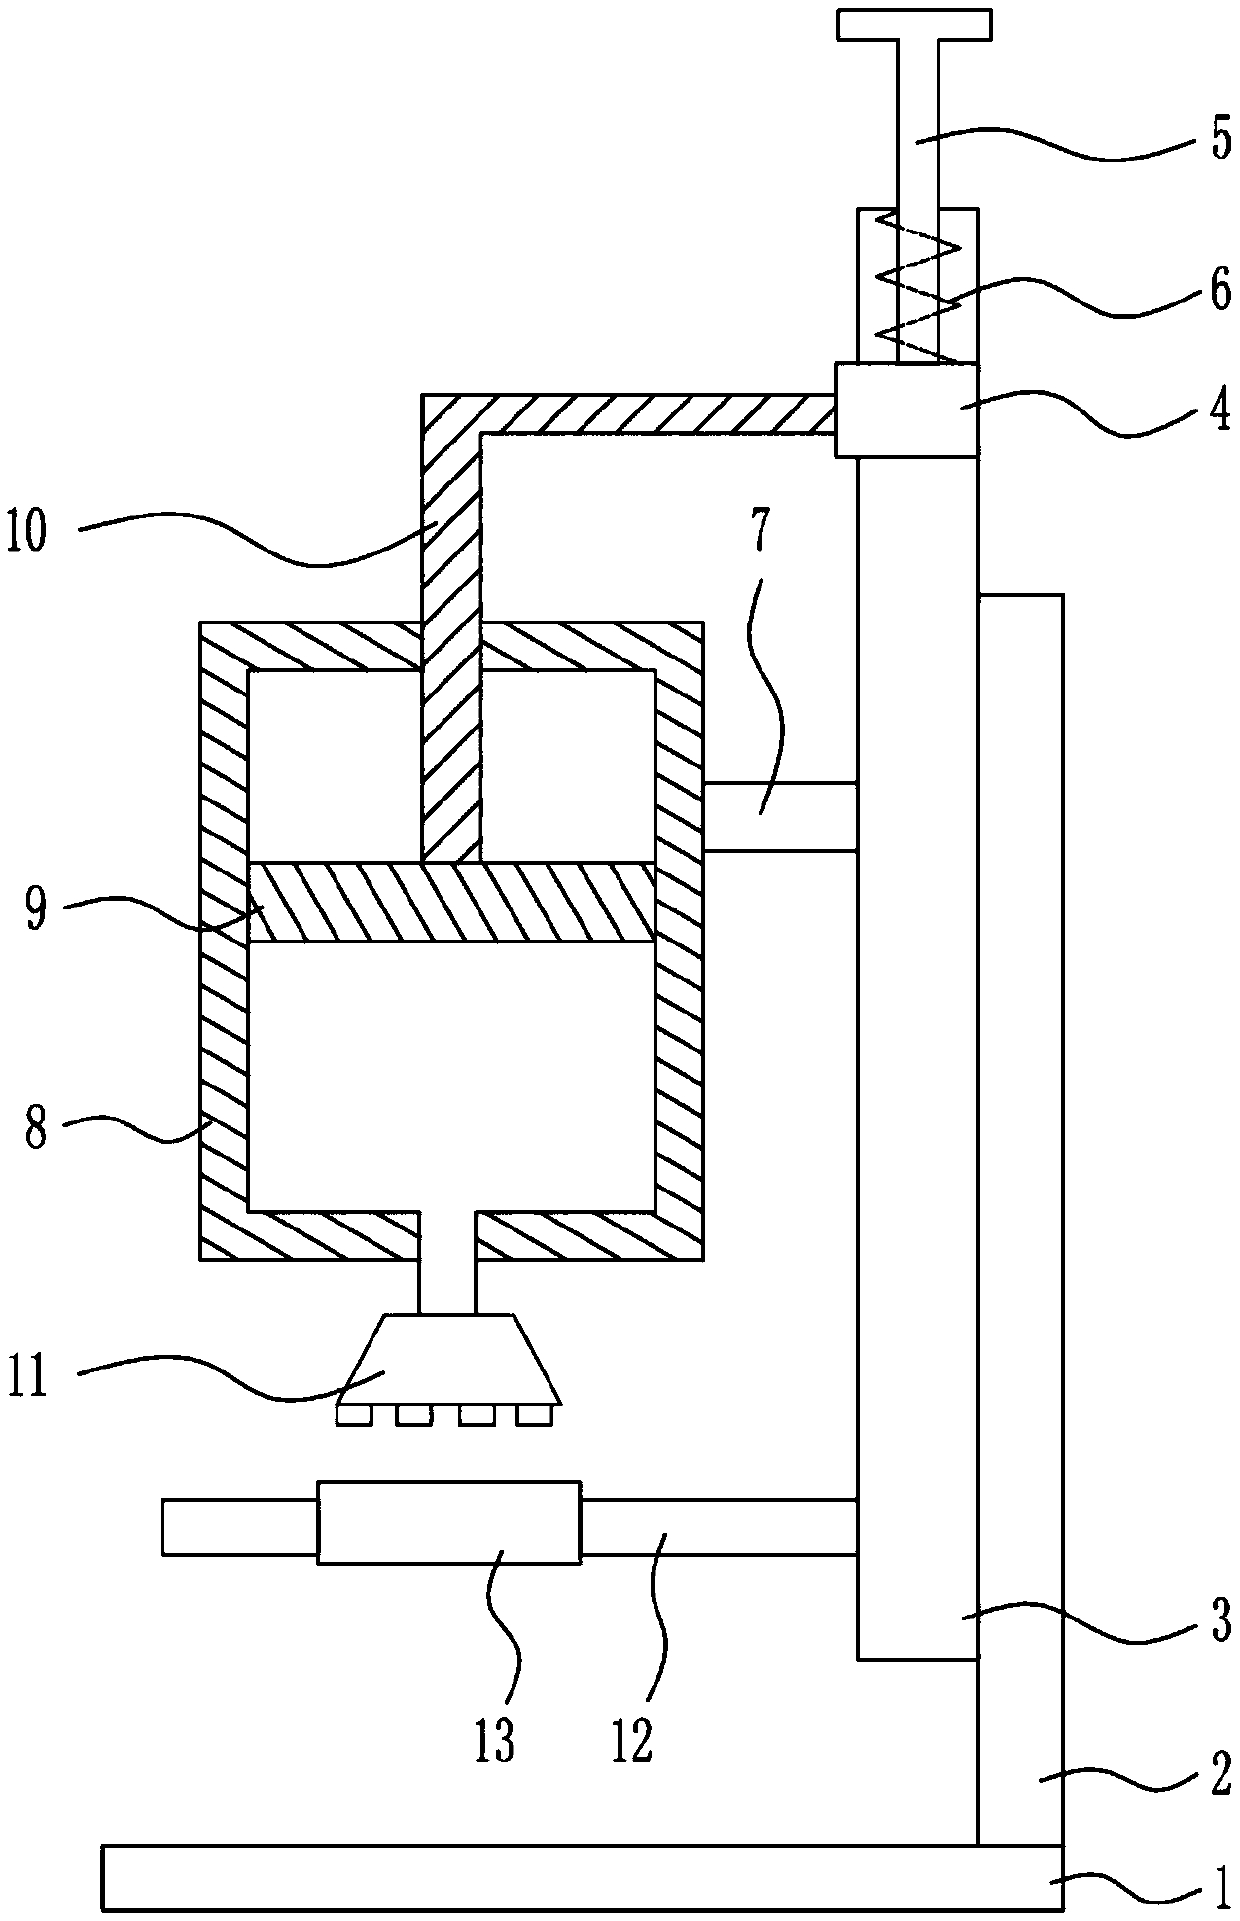 A rotary main valve plate coating equipment